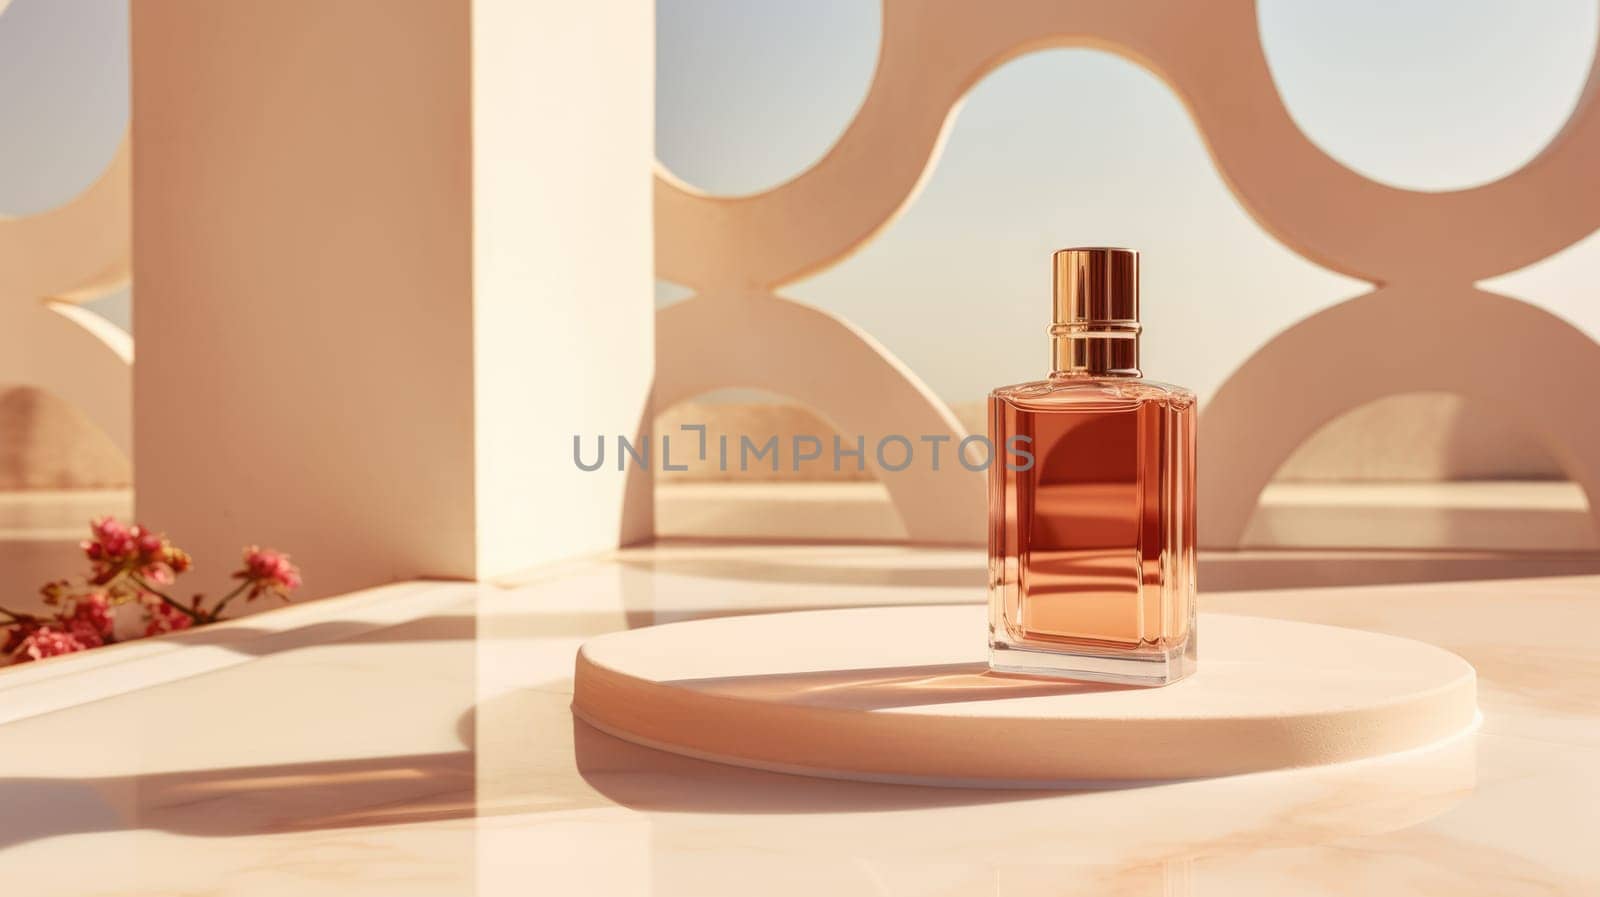 Transparent brown glass perfume bottle mockup on pedestal with minimalist background. Eau de toilette. Mockup, spring flat lay